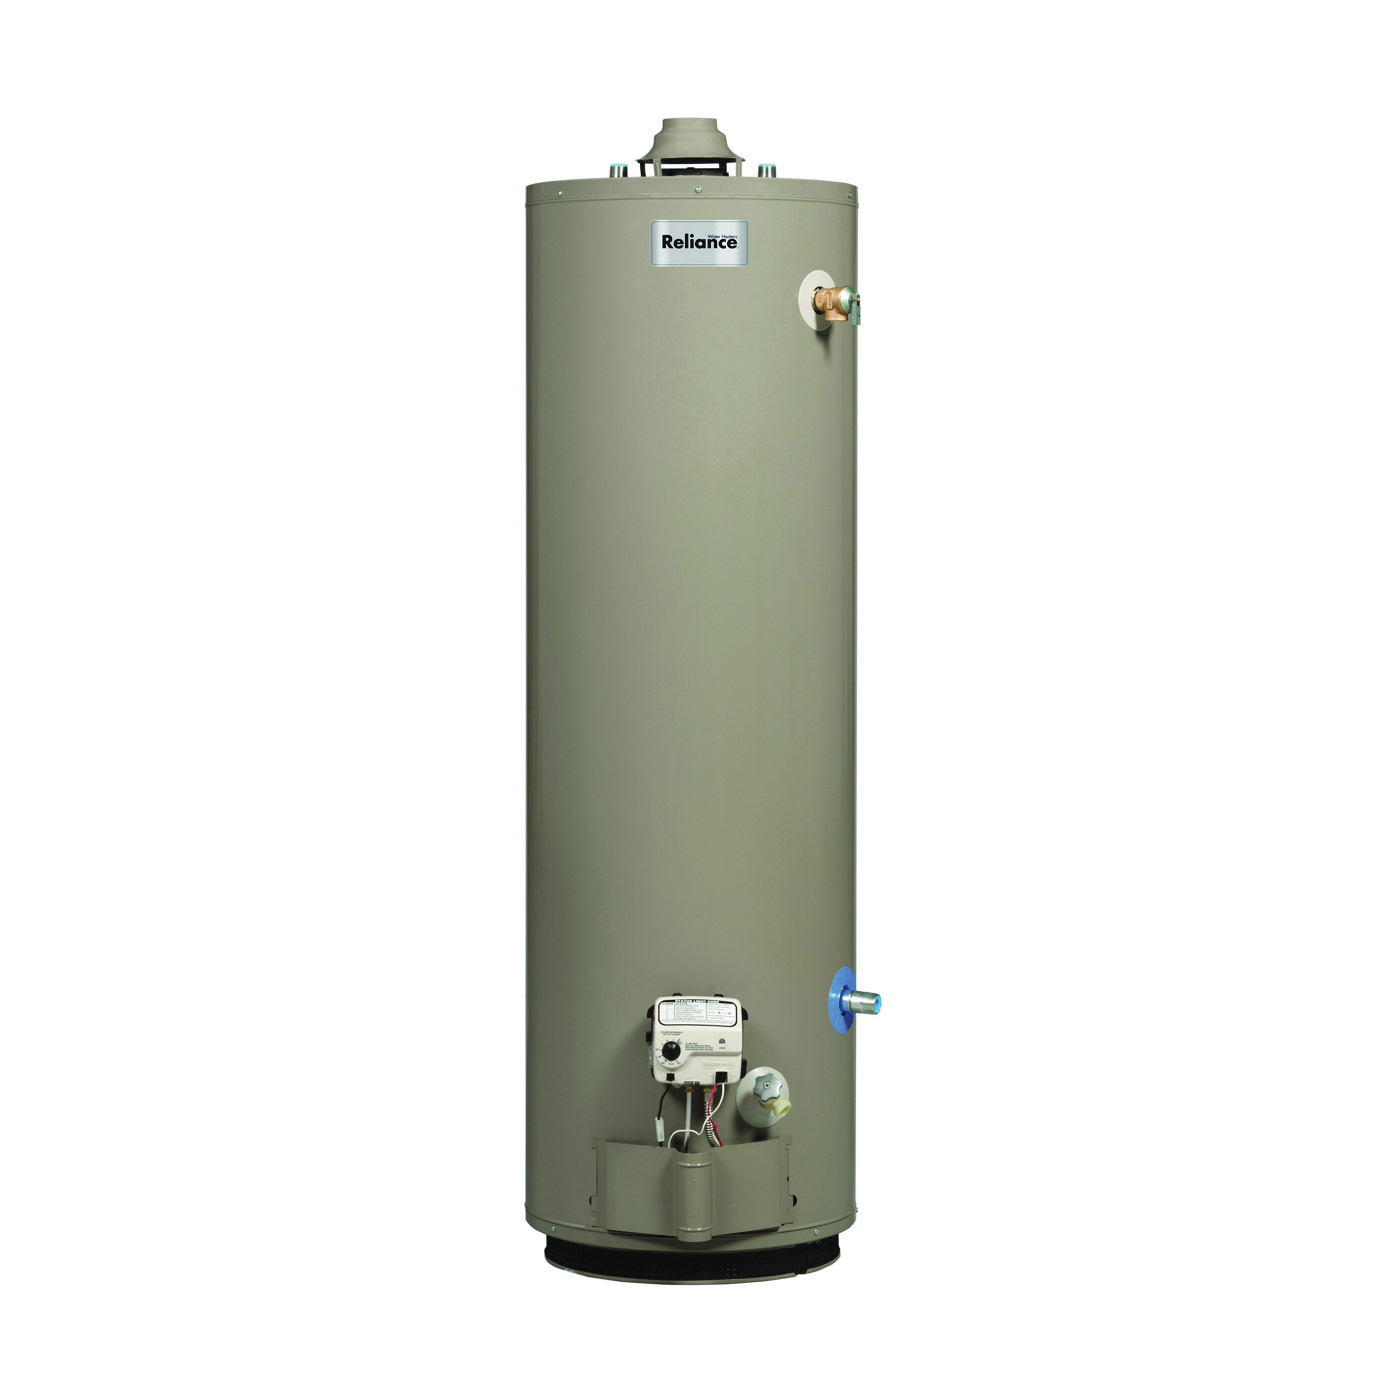 6 30 NOMT Gas Water Heater, Natural Gas, Propane, 30 gal Tank, 63 gph, 35500 Btu BTU, 0.61 Energy Efficiency